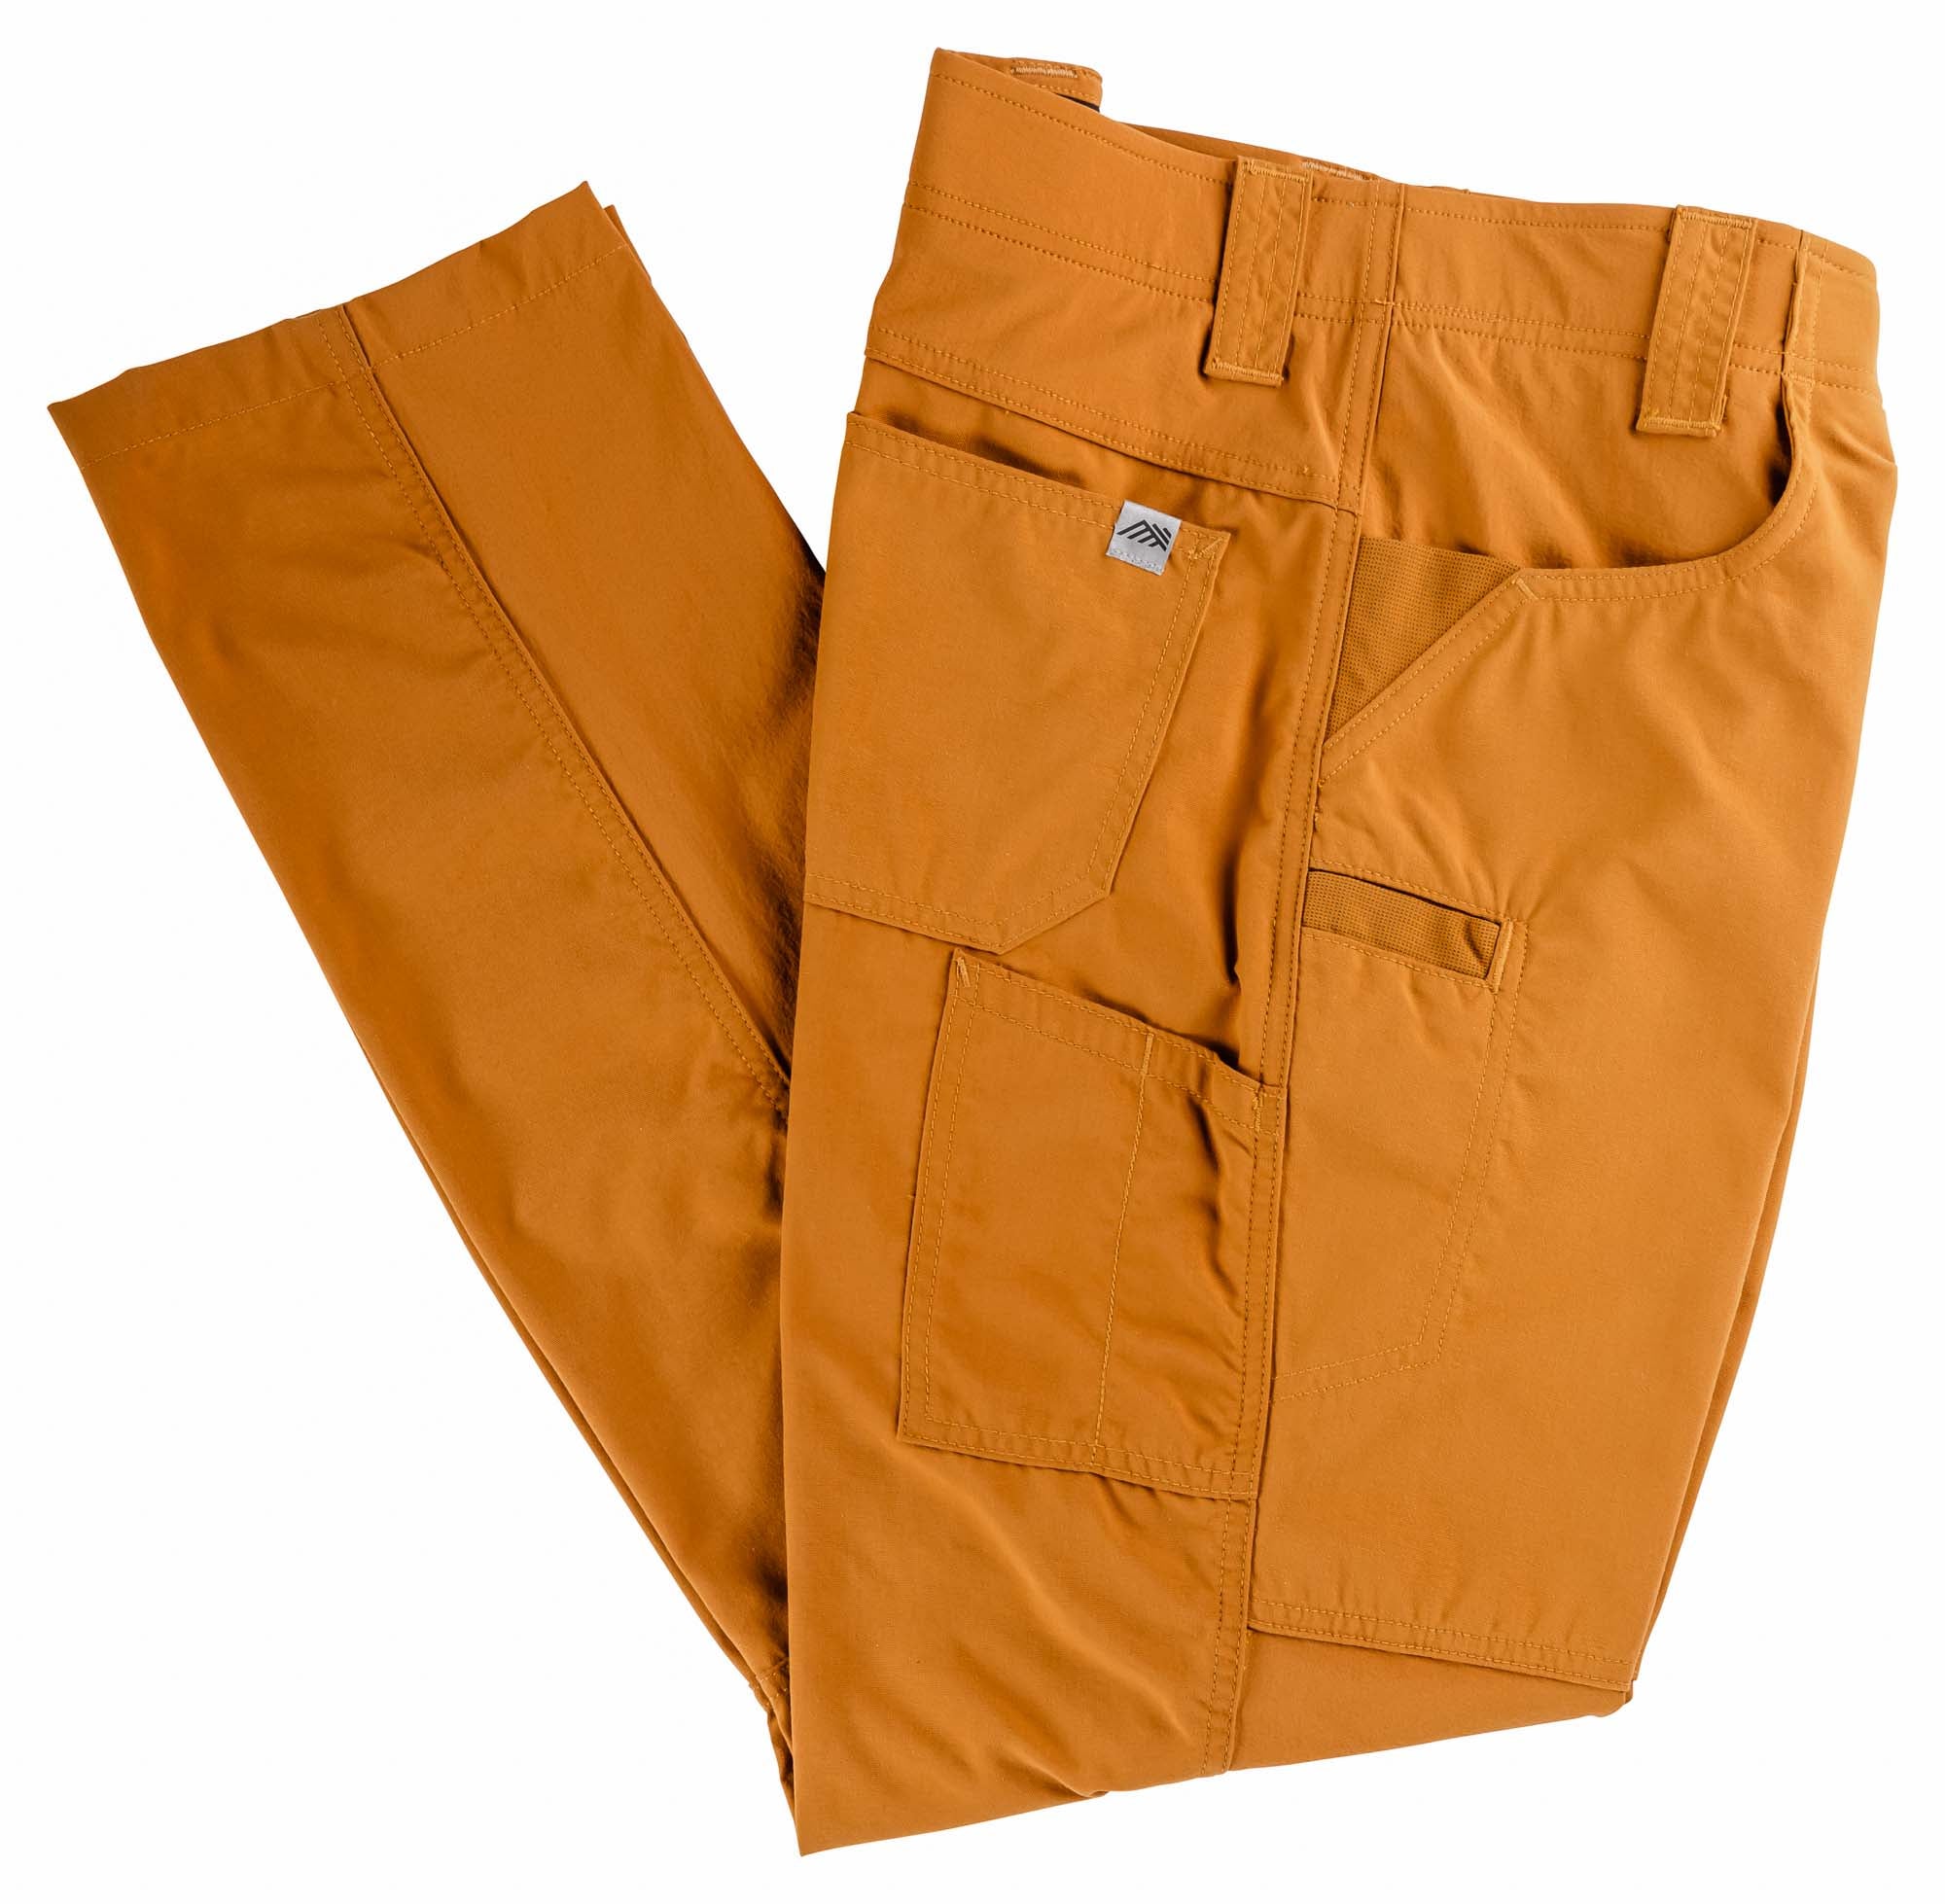 Cordura Work Trousers - Top brands, all trades – workweargurus.com